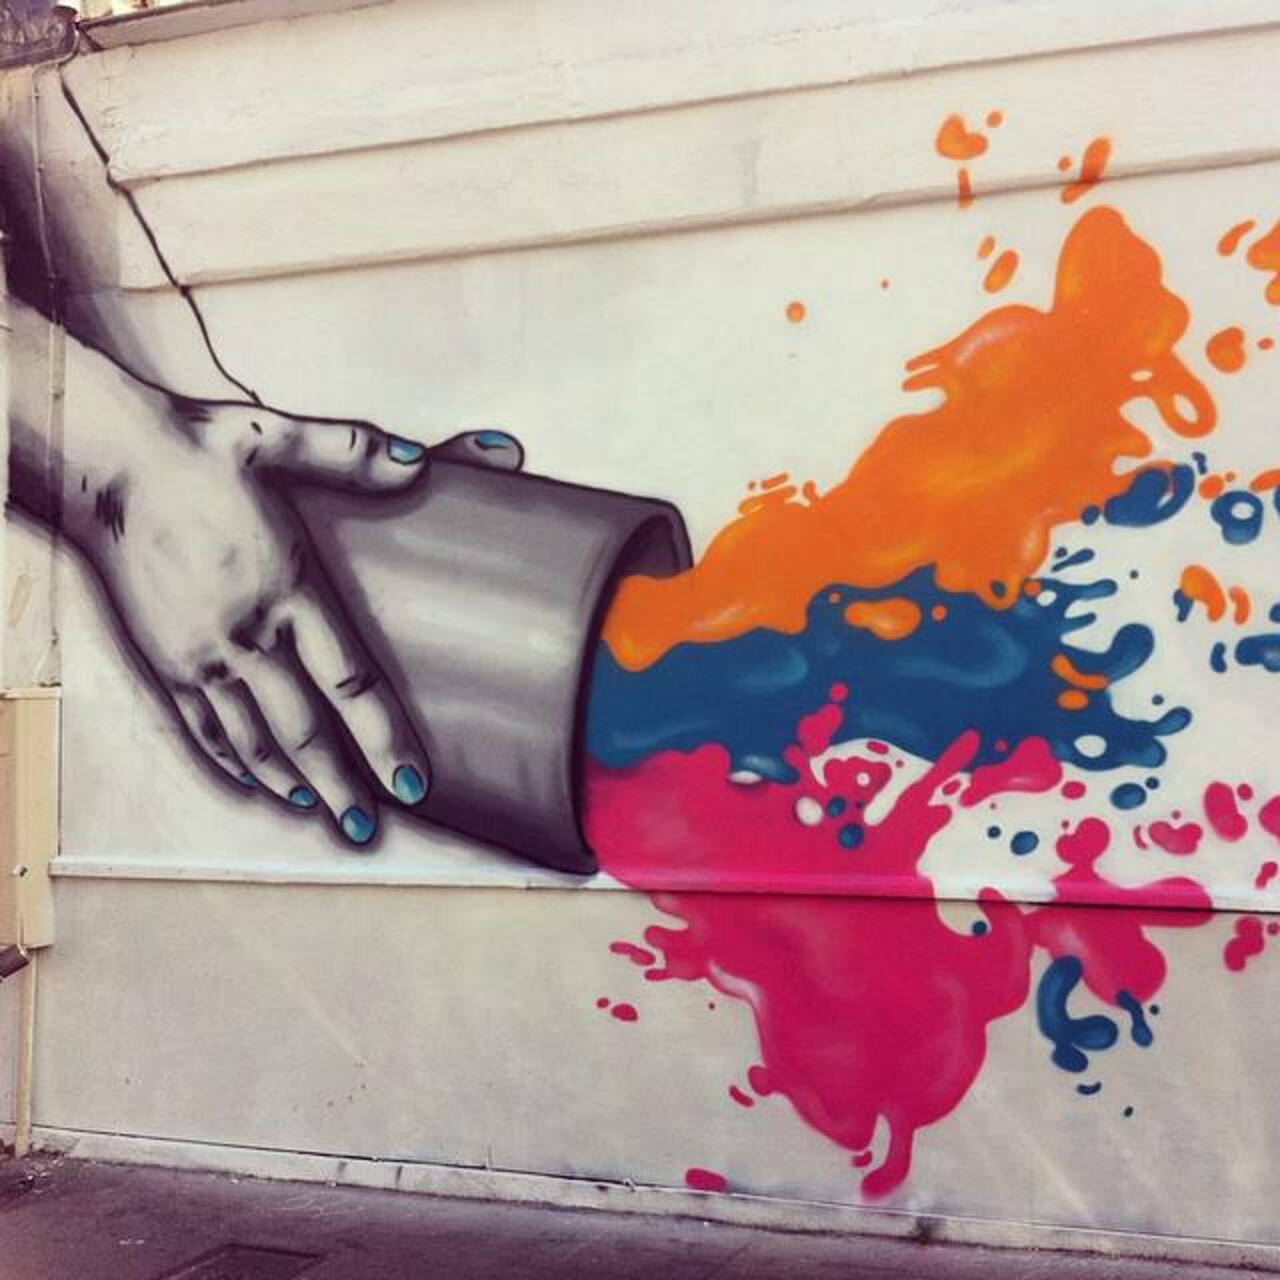 #Paris #graffiti photo by @benstagramin http://ift.tt/1WVlDy6 #StreetArt http://t.co/kSUoC0XGX9